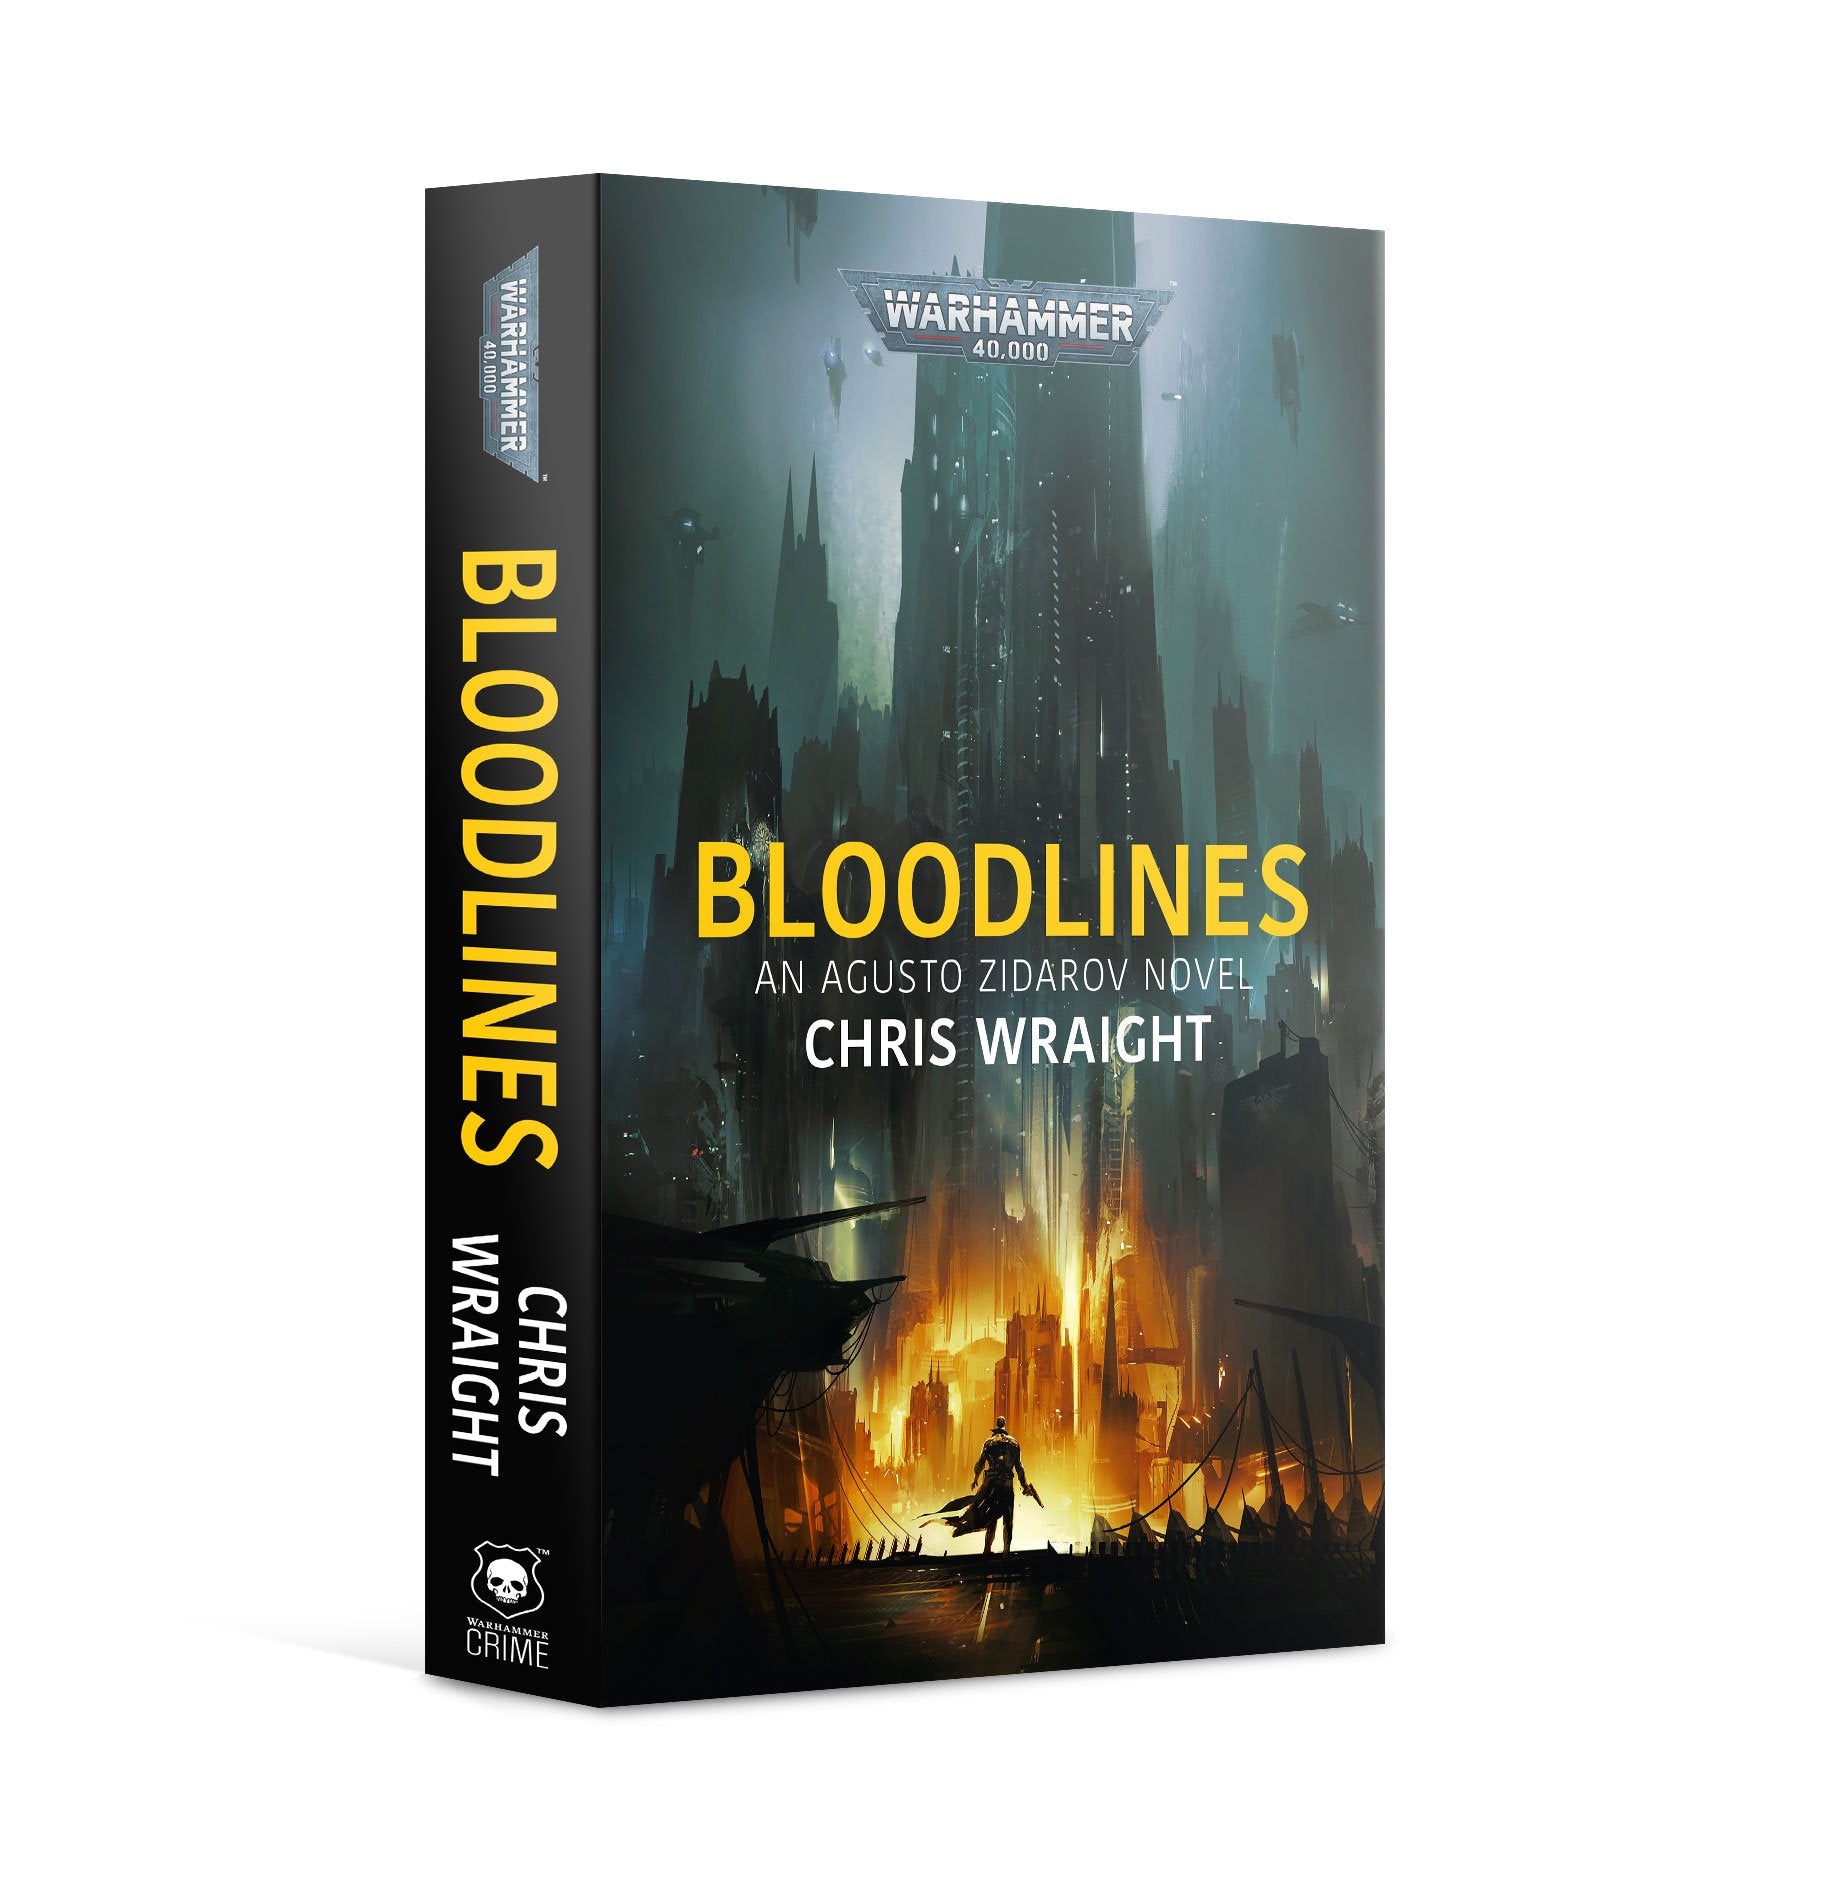 Warhammer Crime - Bloodlines (Pb) (Bl2851) - Waterfront News